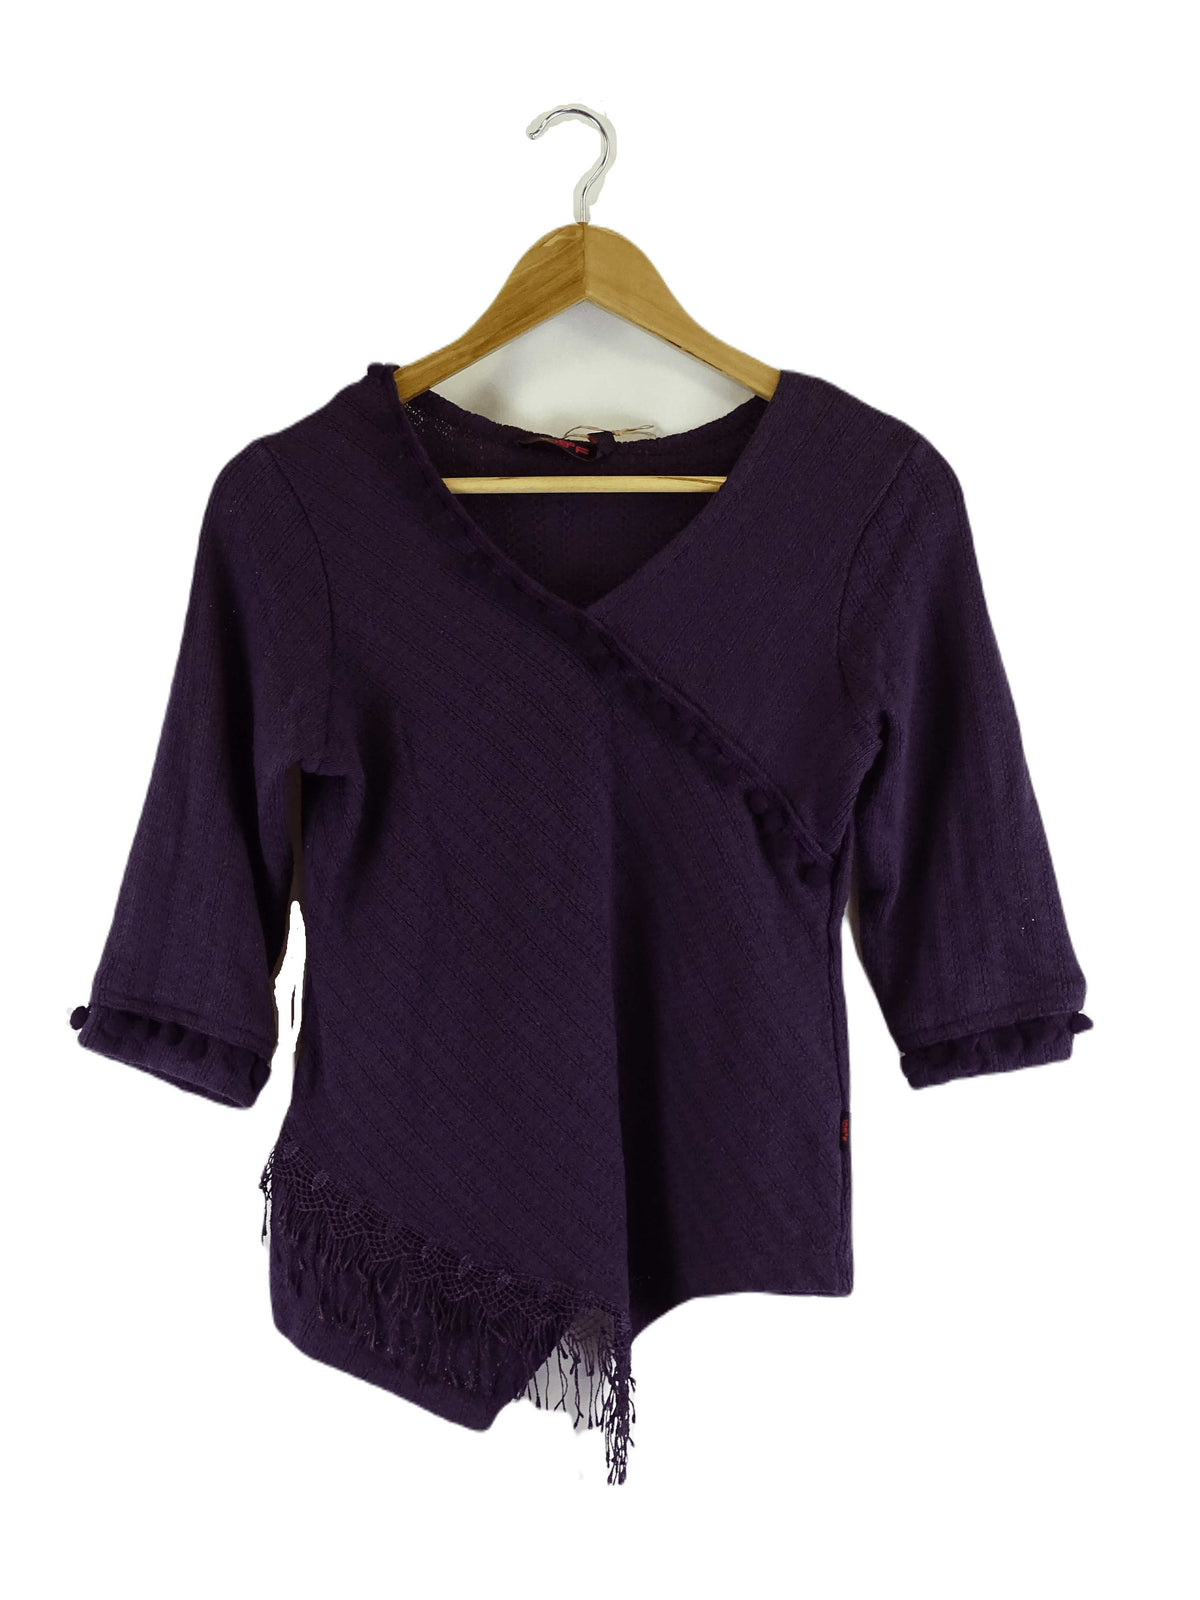 109 F Purple Asymmetrical Knit 3/4 Sleeve Top M